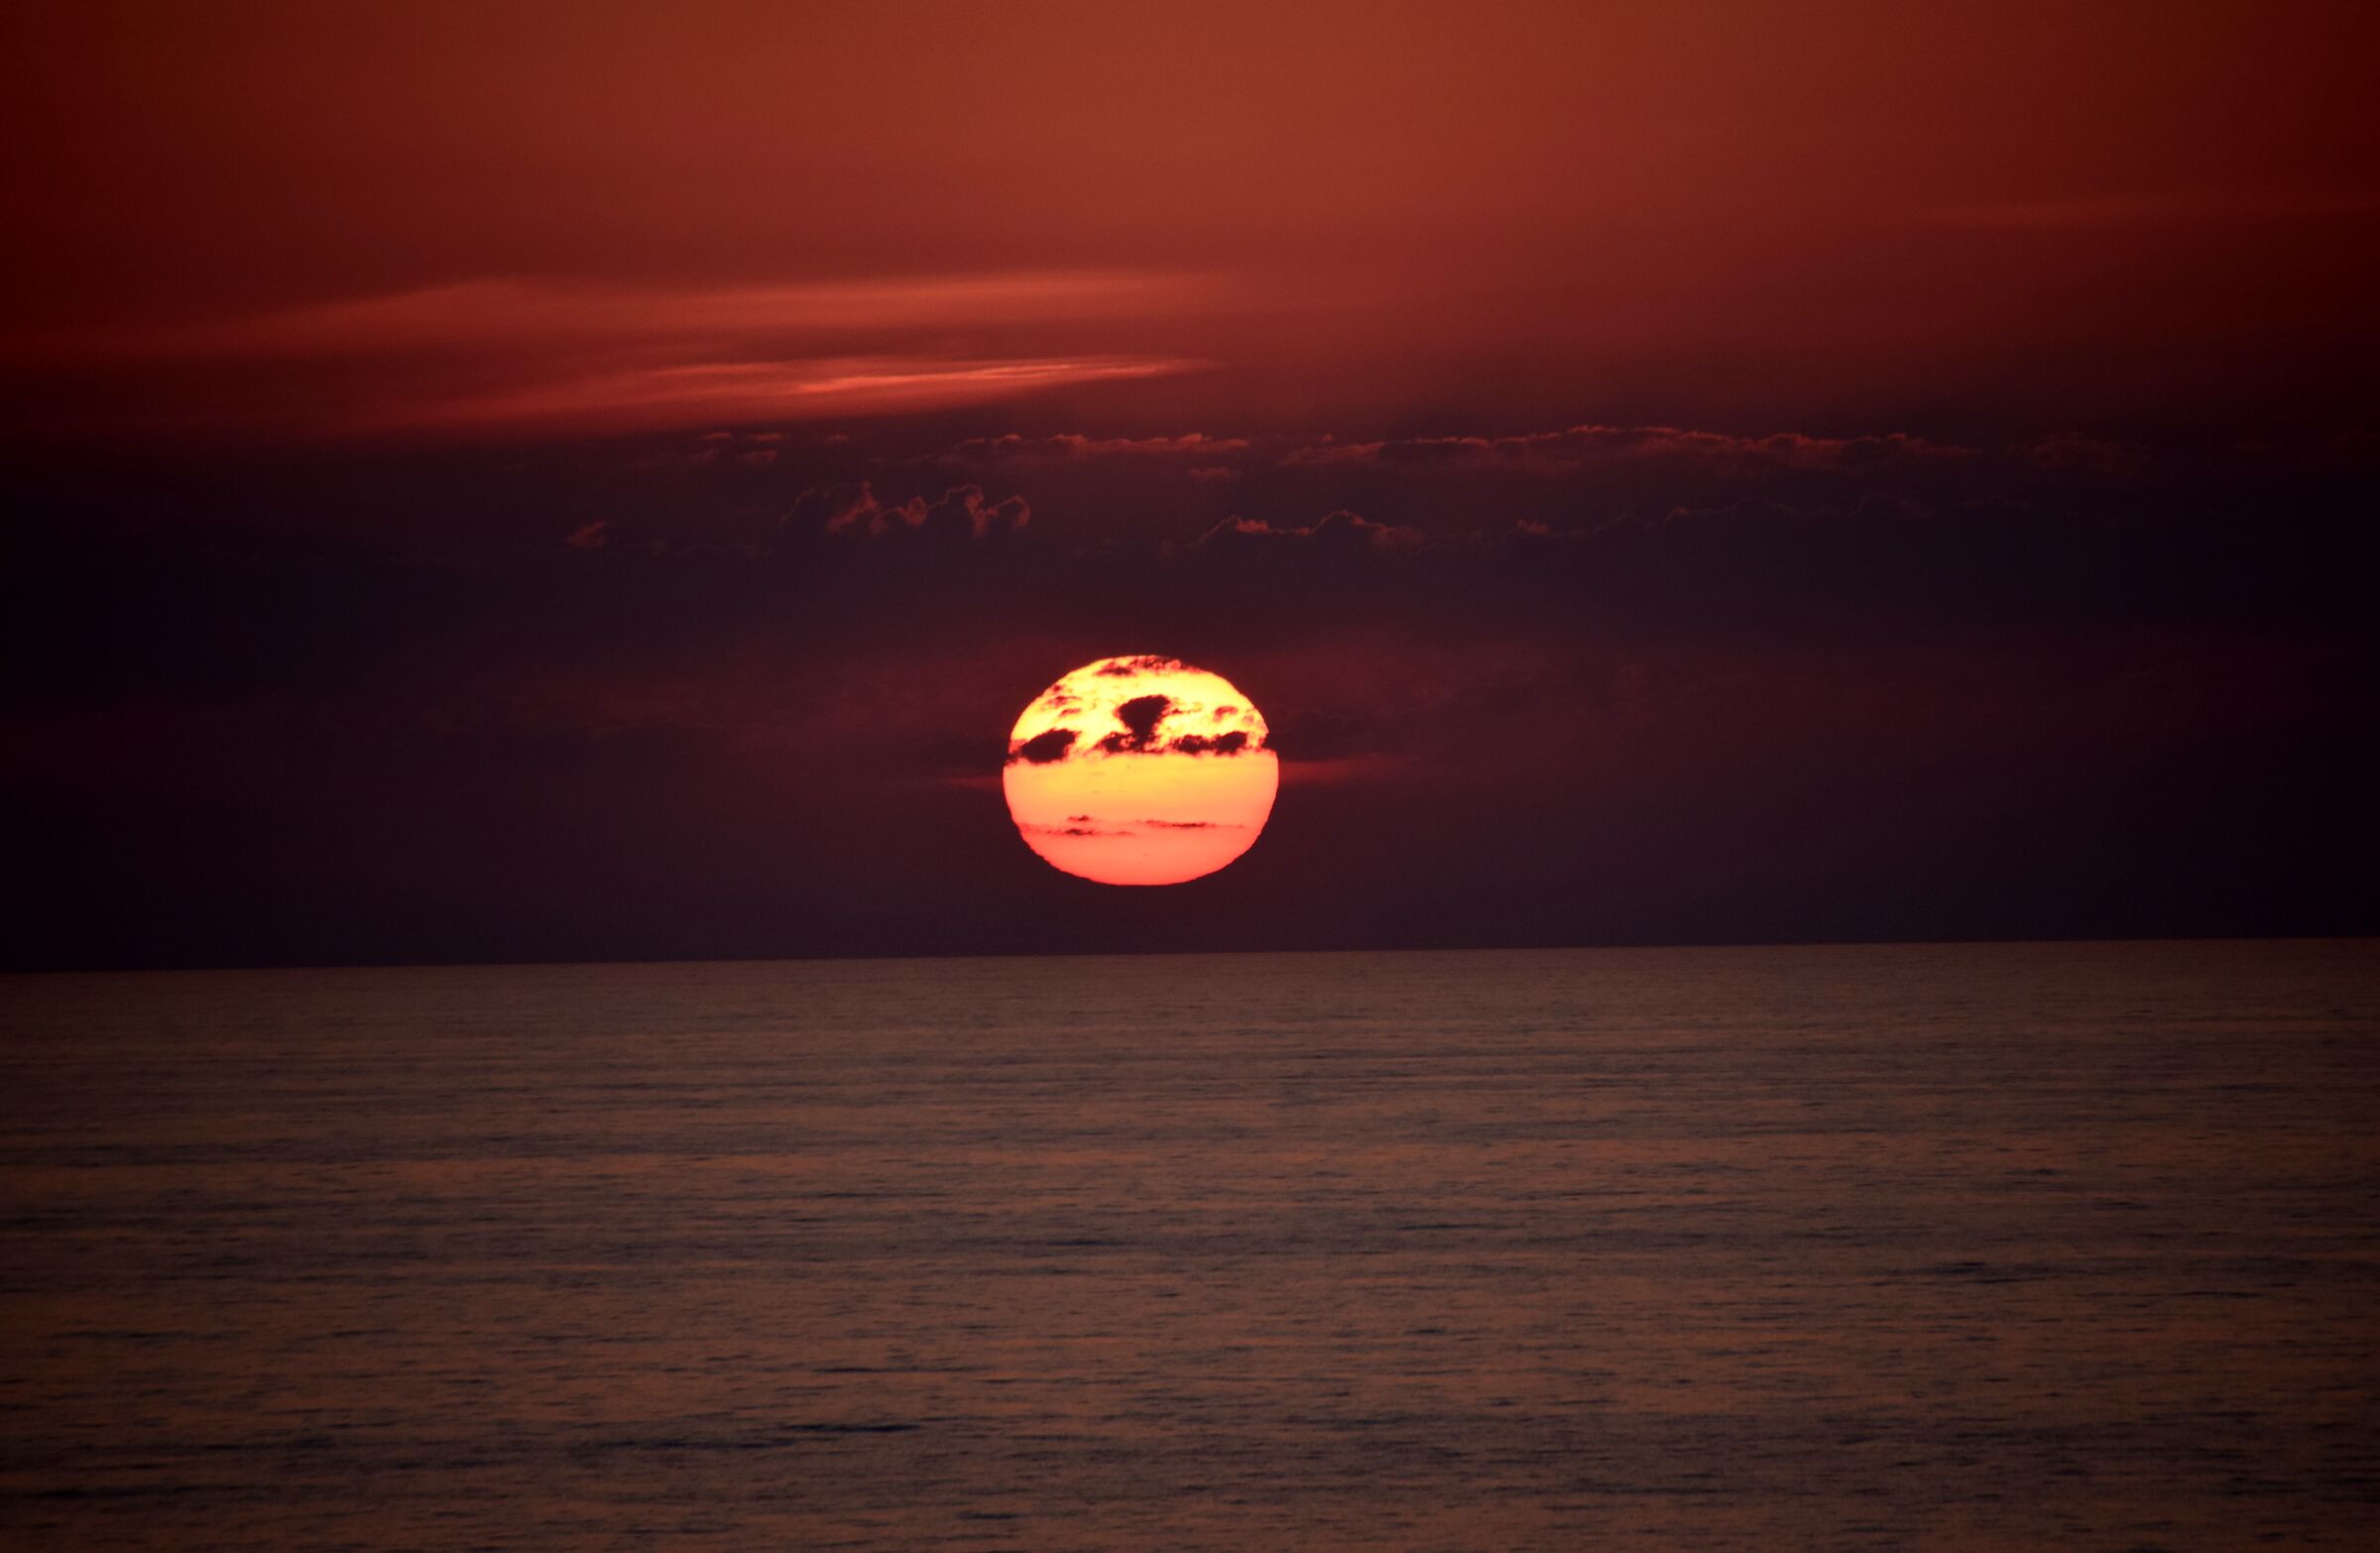 Sunrise over the Atlantic...